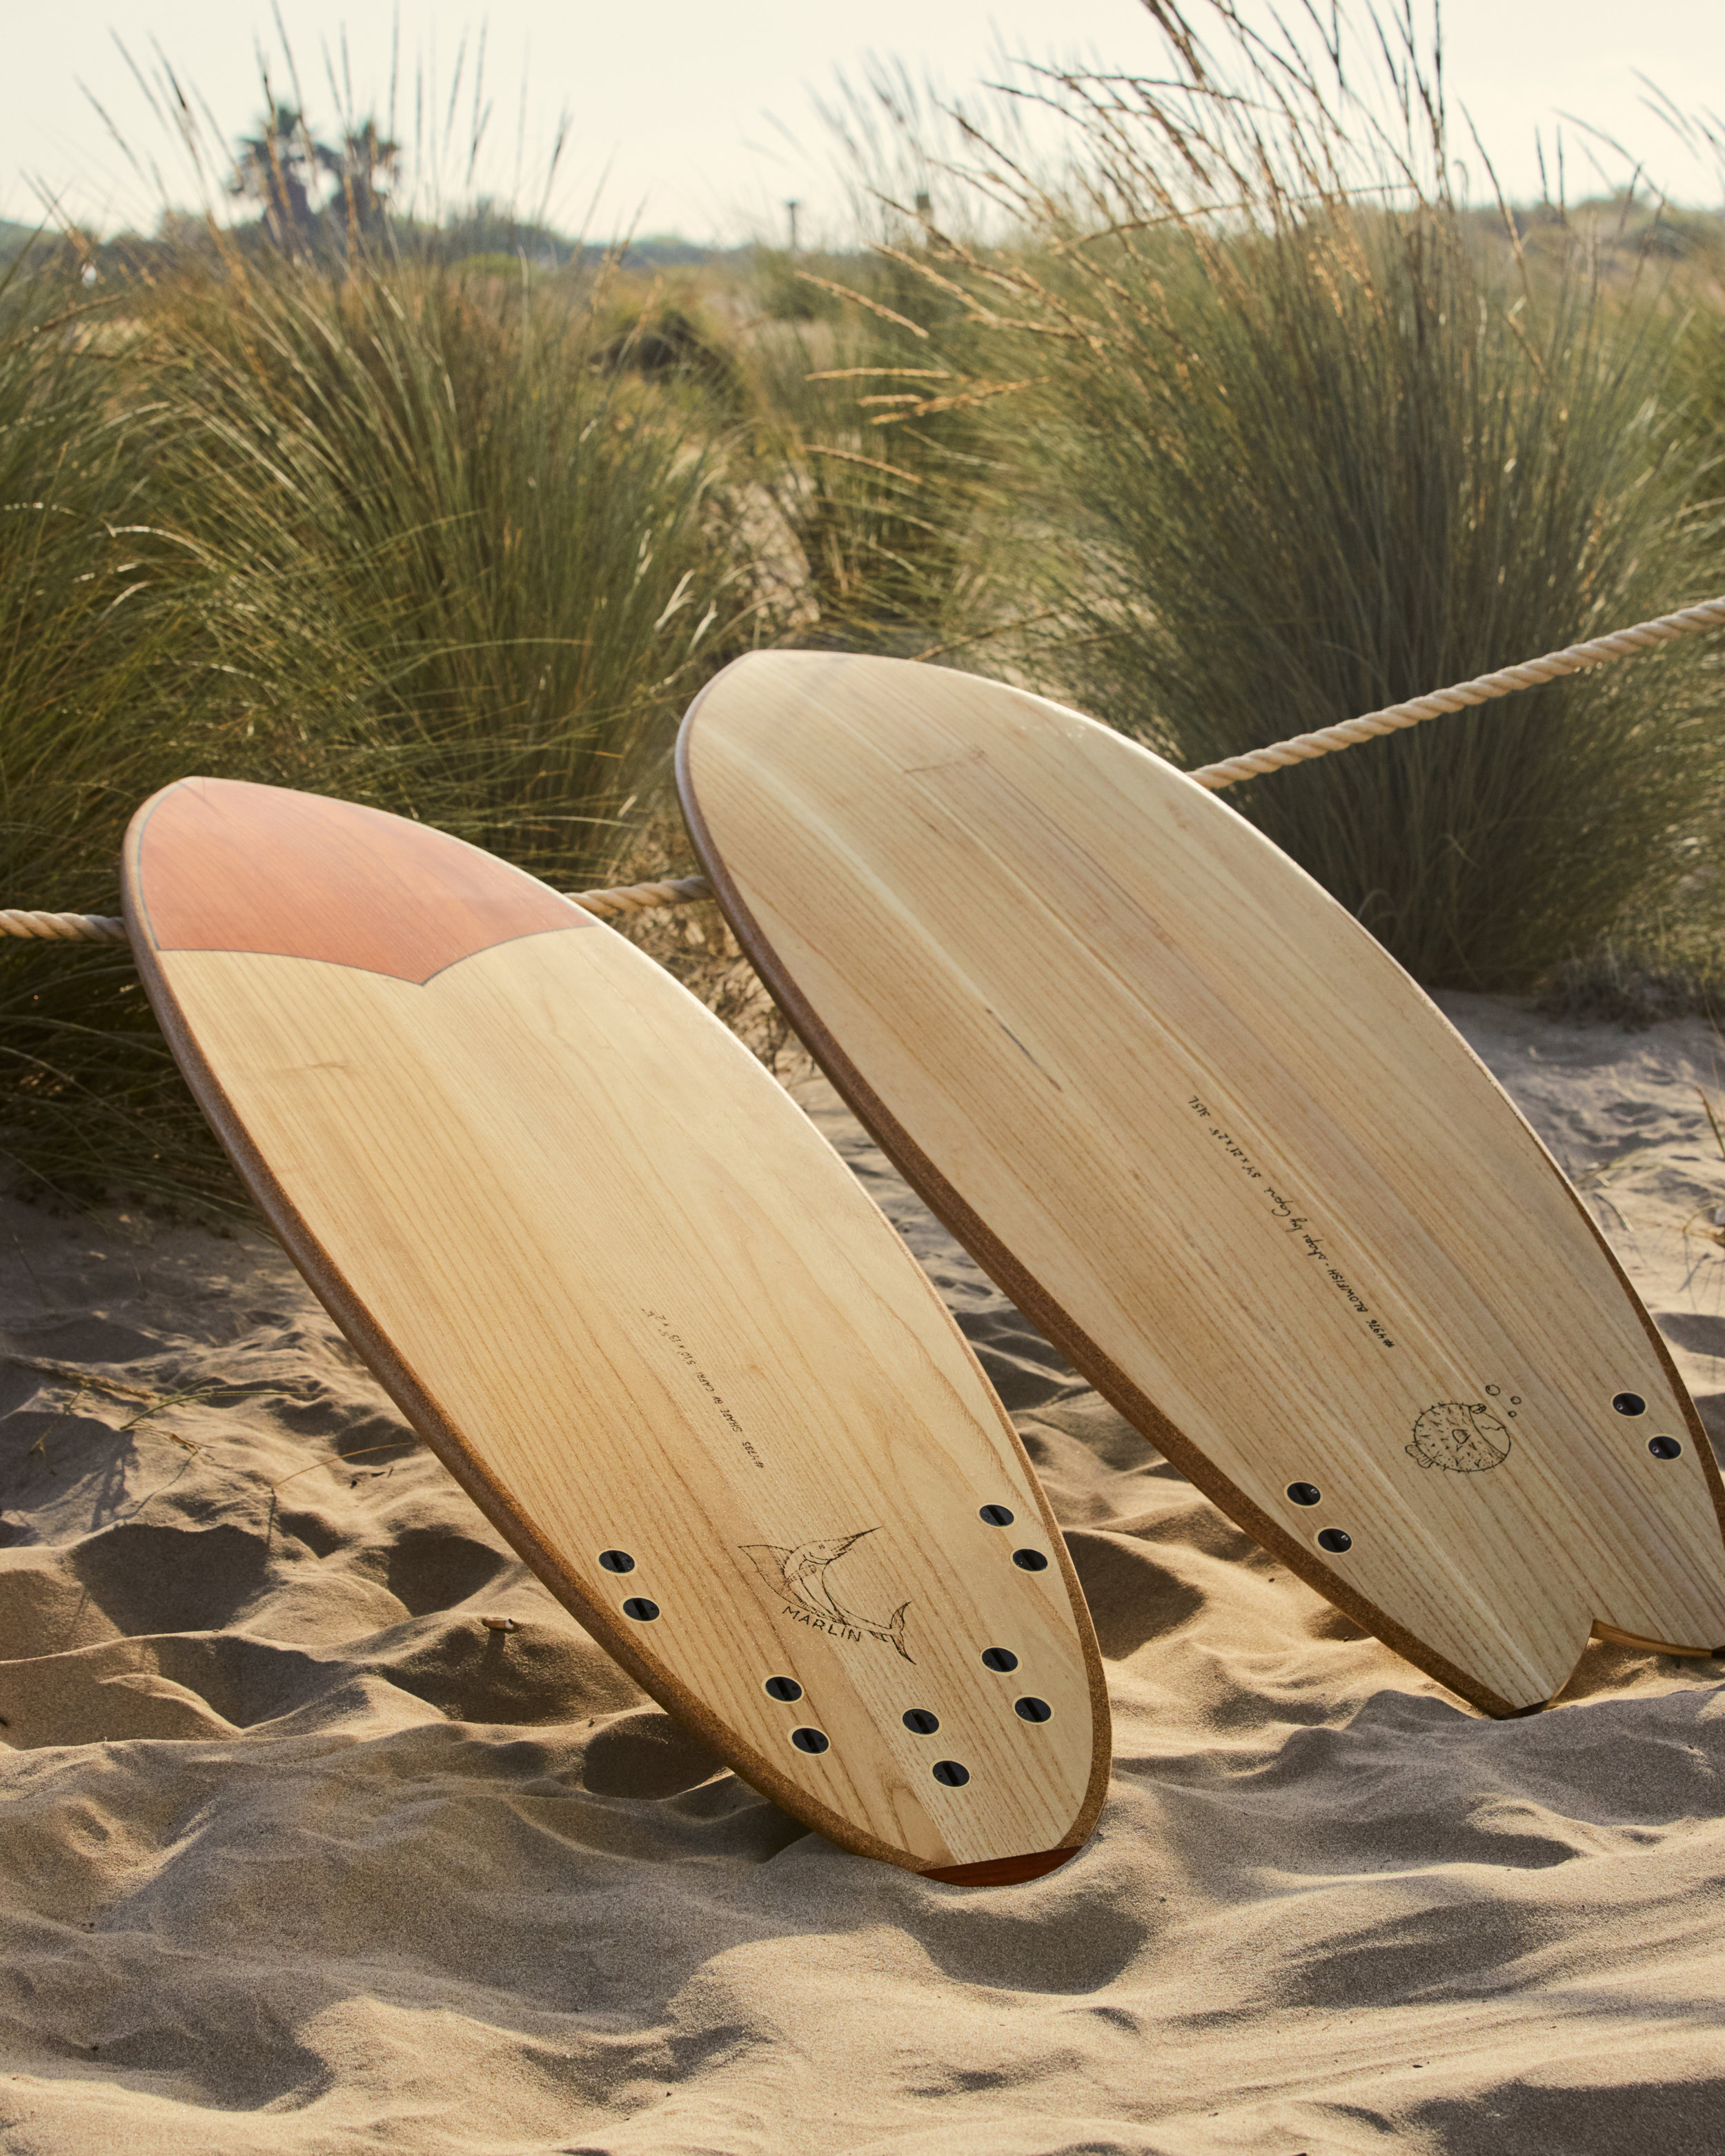 wooden sustainable eco surfboard Truwood (copia)